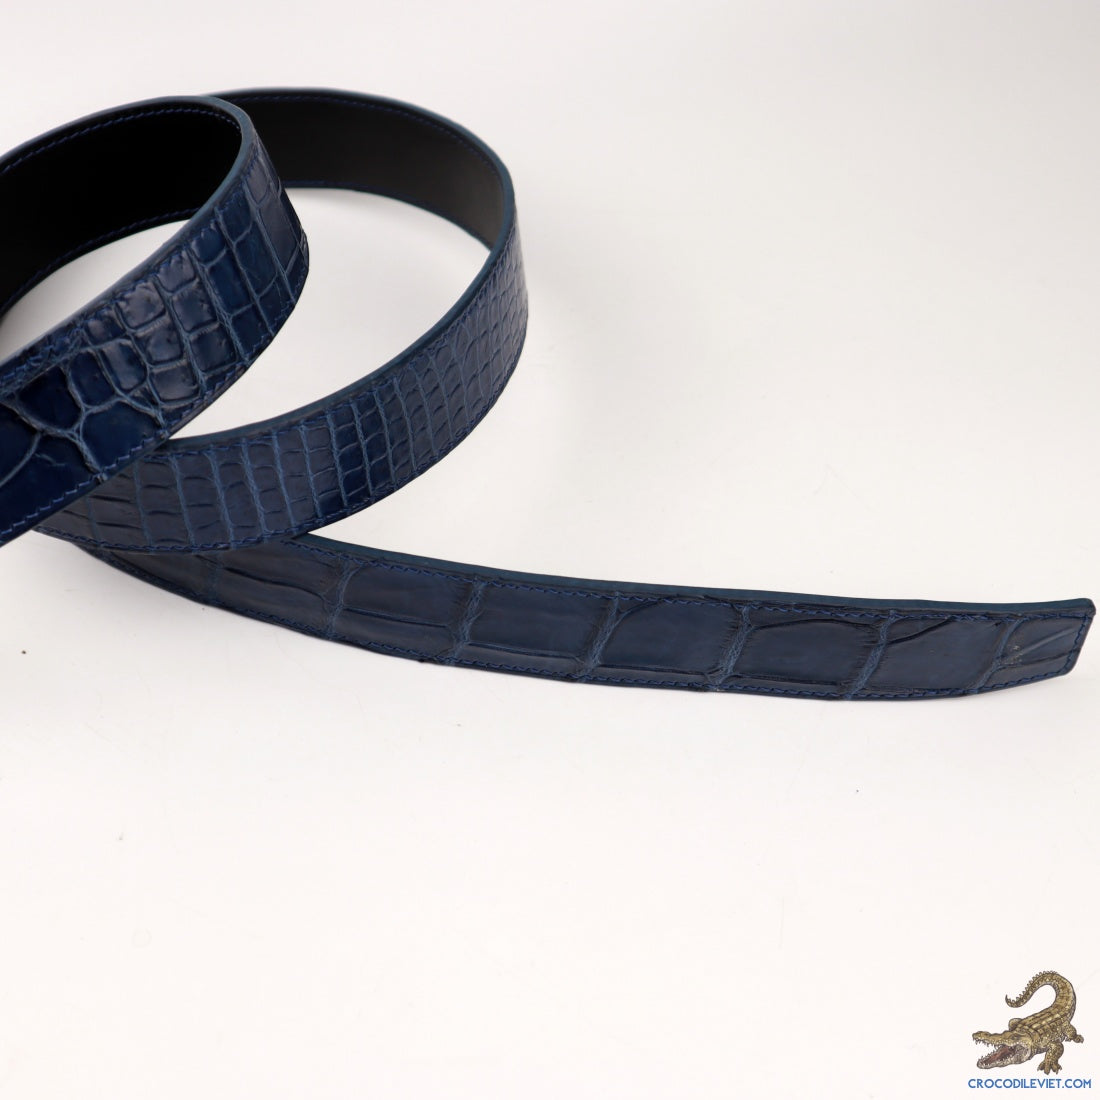 Crocodile leather belt in deep blue